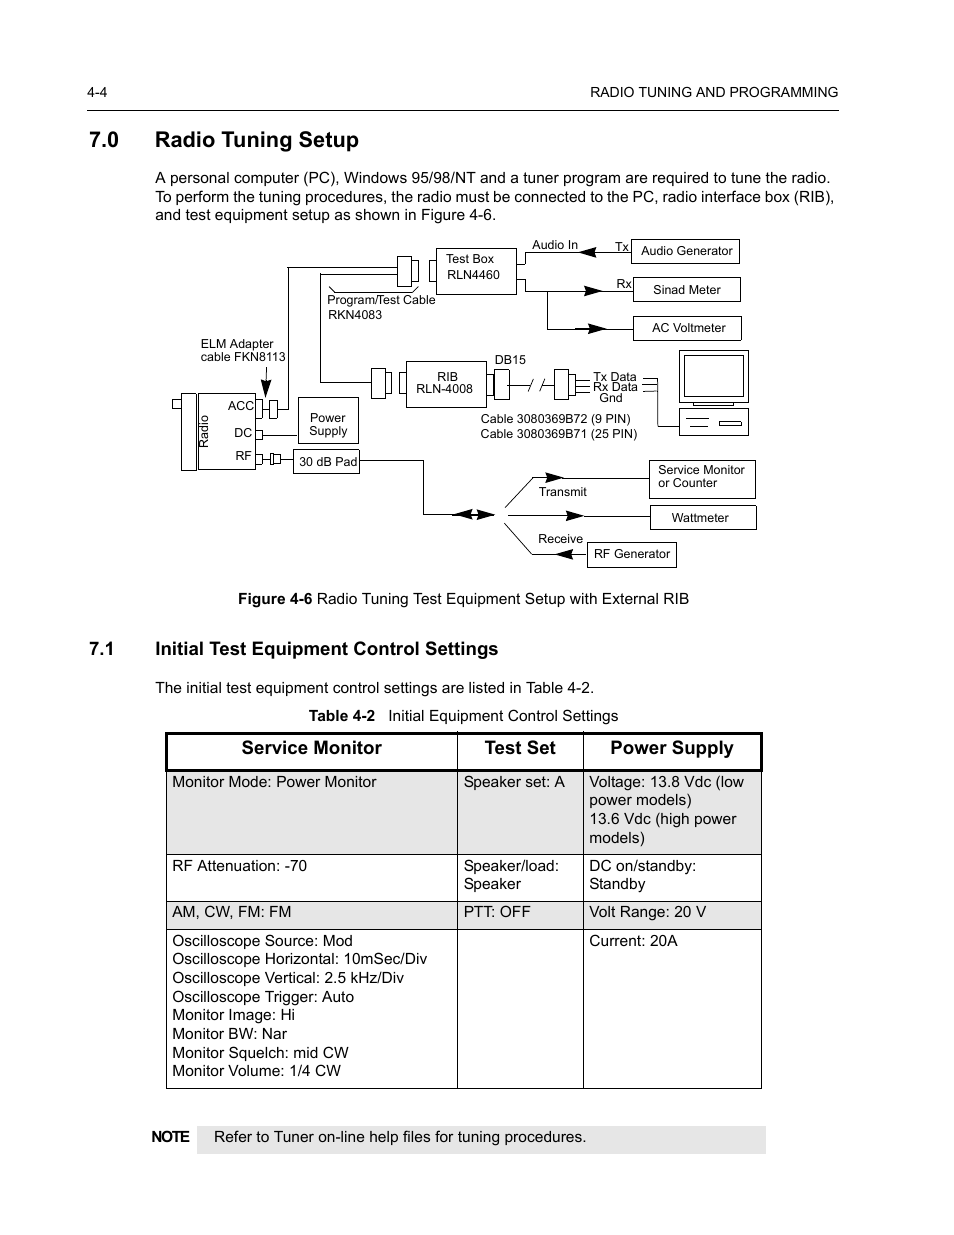 0 radio tuning setup, 1 initial test equipment control settings, Service monitor test set power supply | Nikon RADIUS CM200 User Manual | Page 46 / 70